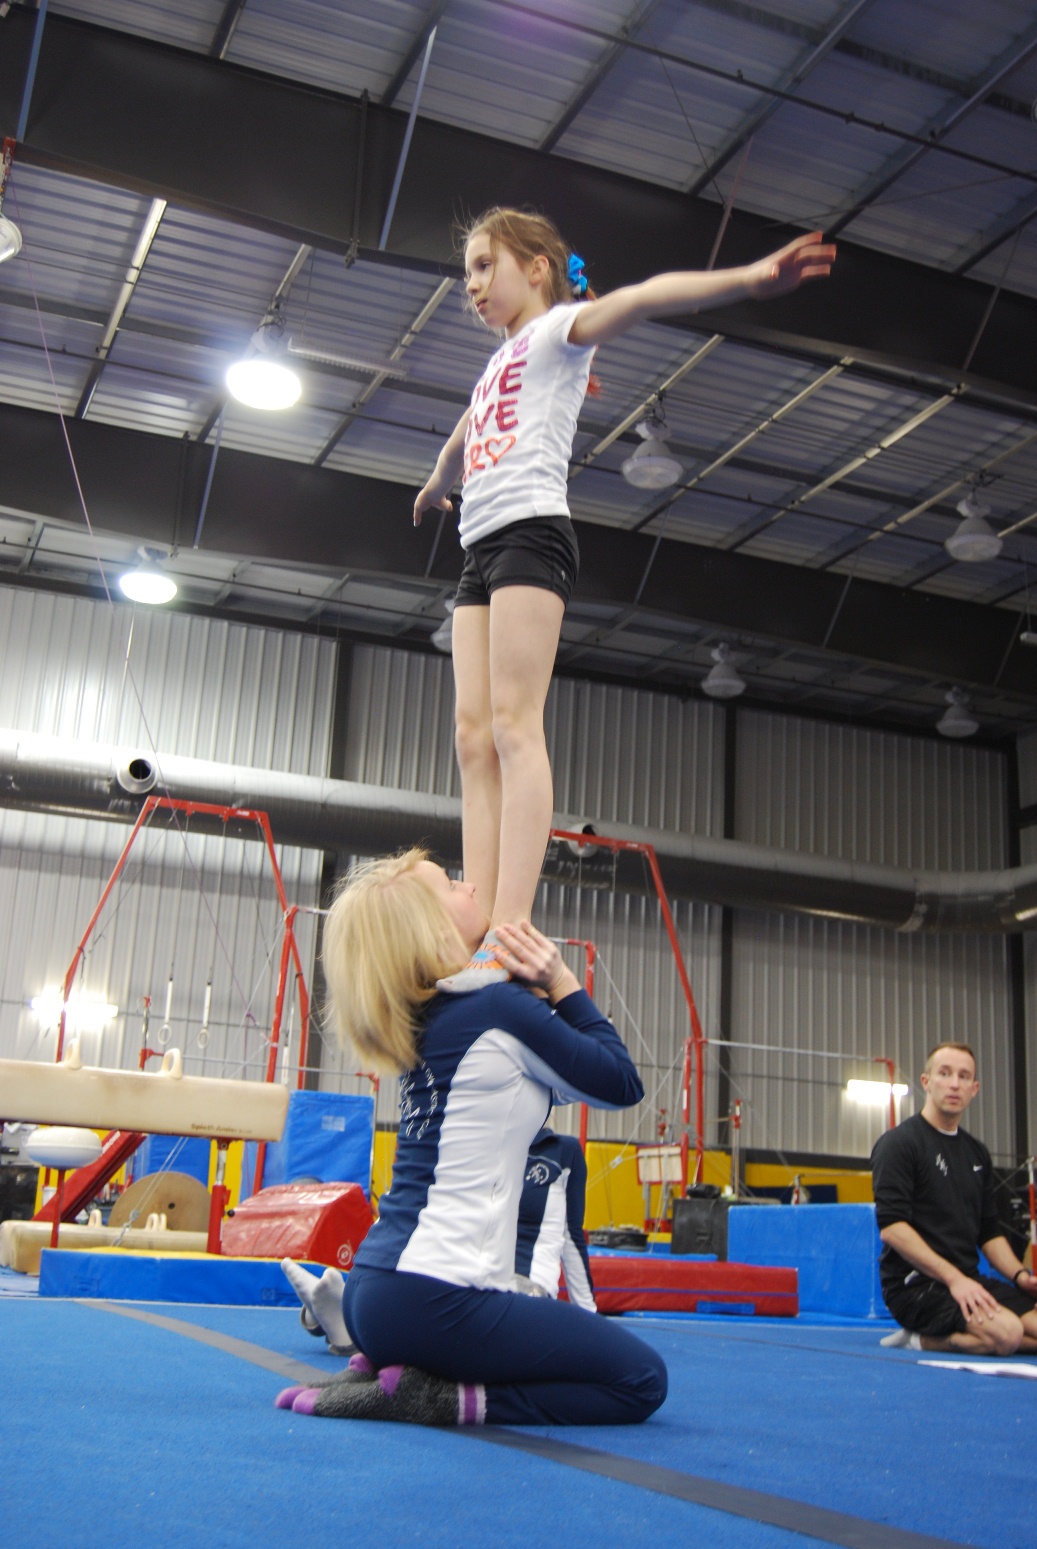 Oakville Gymnastics Club Acrobatic Gymnastics Team Go Acro Beginner Level Training Camp